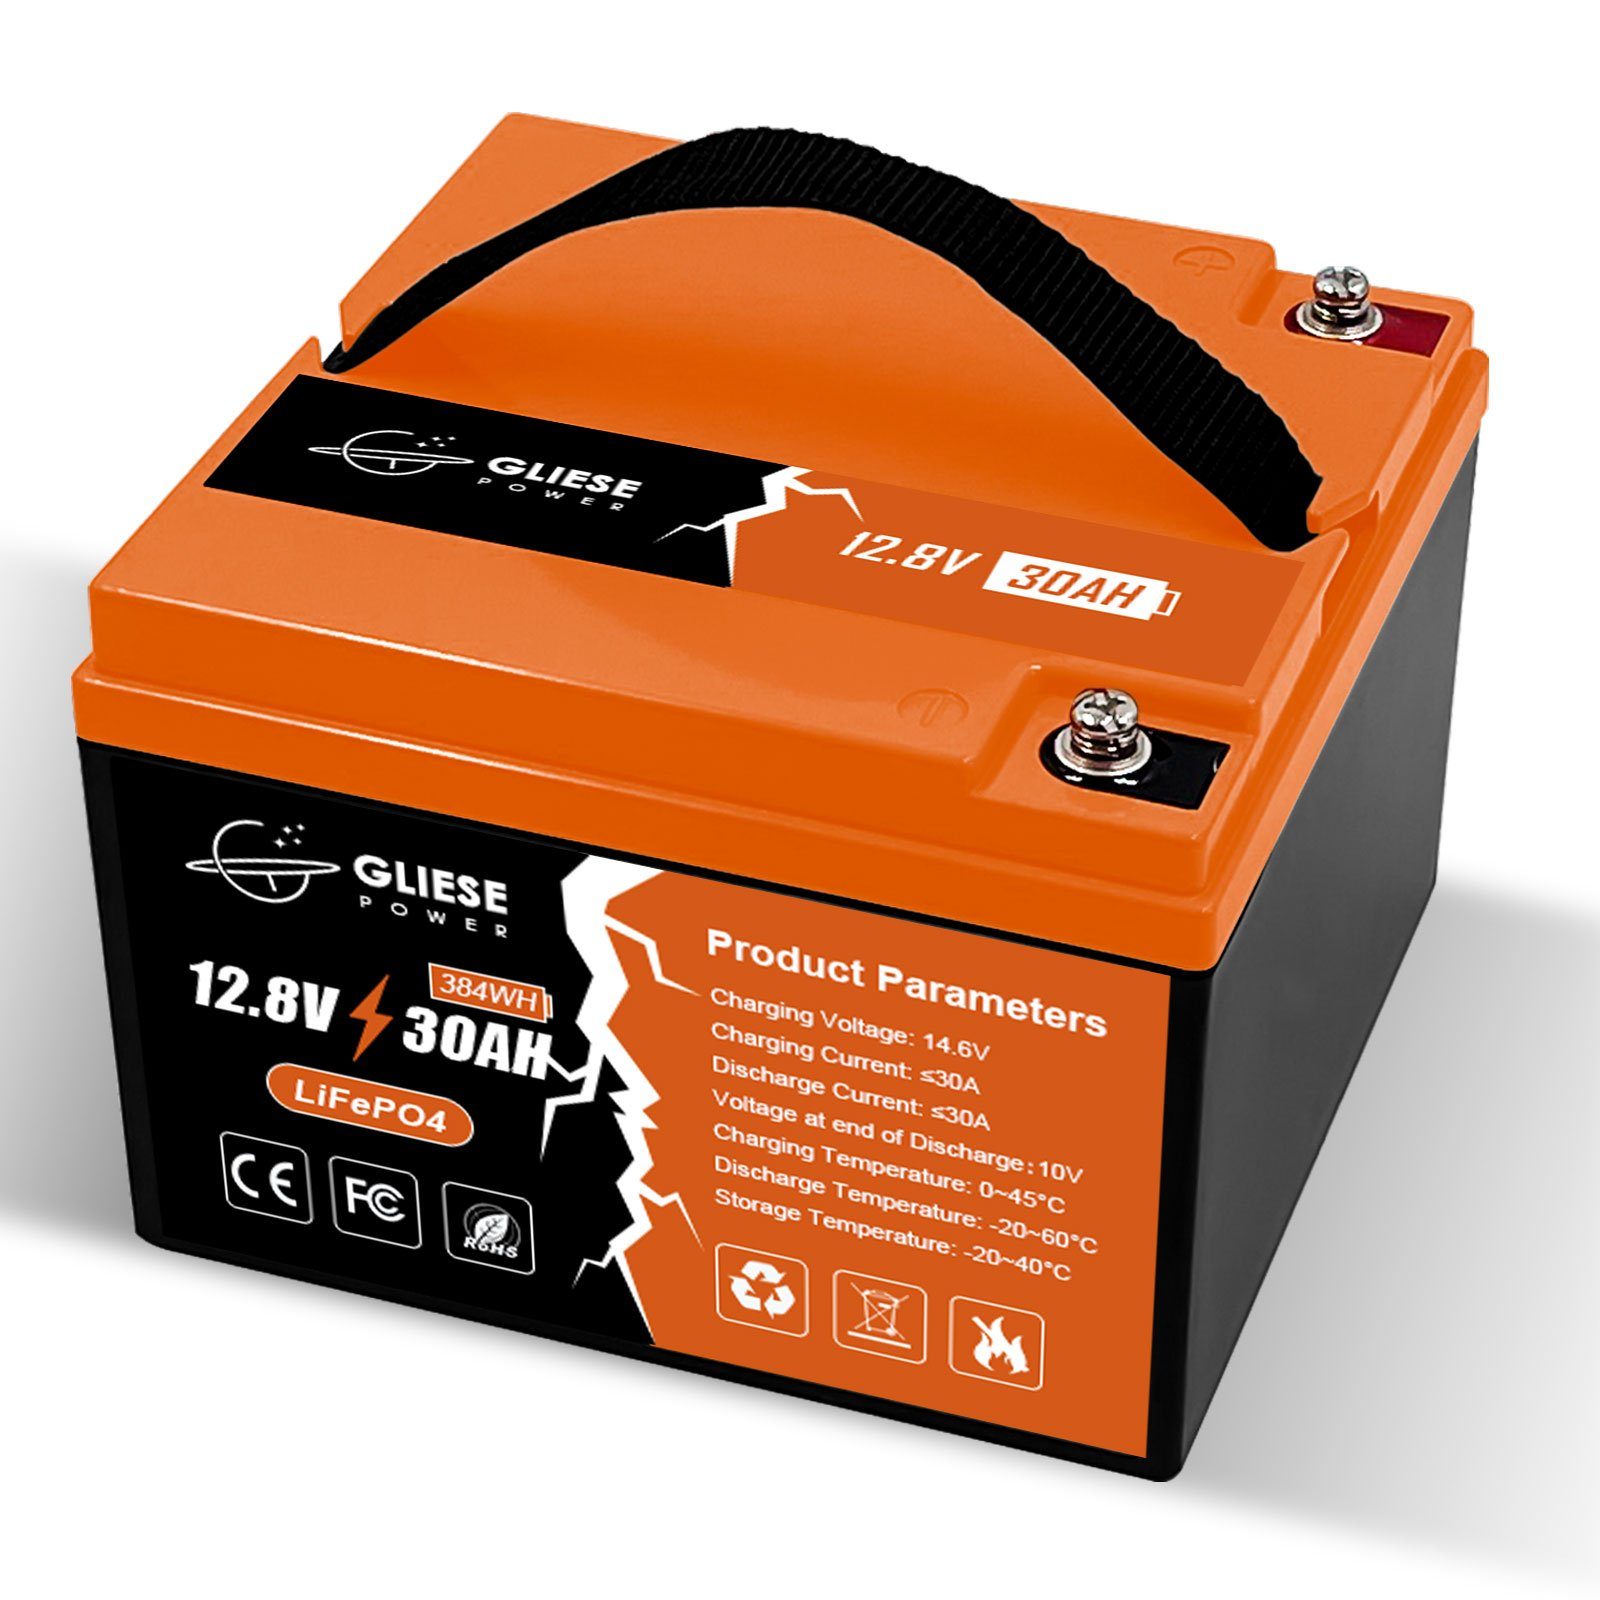 Sunstone Power LiFePO4 Batterie 12V 300Ah 3,84Kwh LiFePO4-Akkus